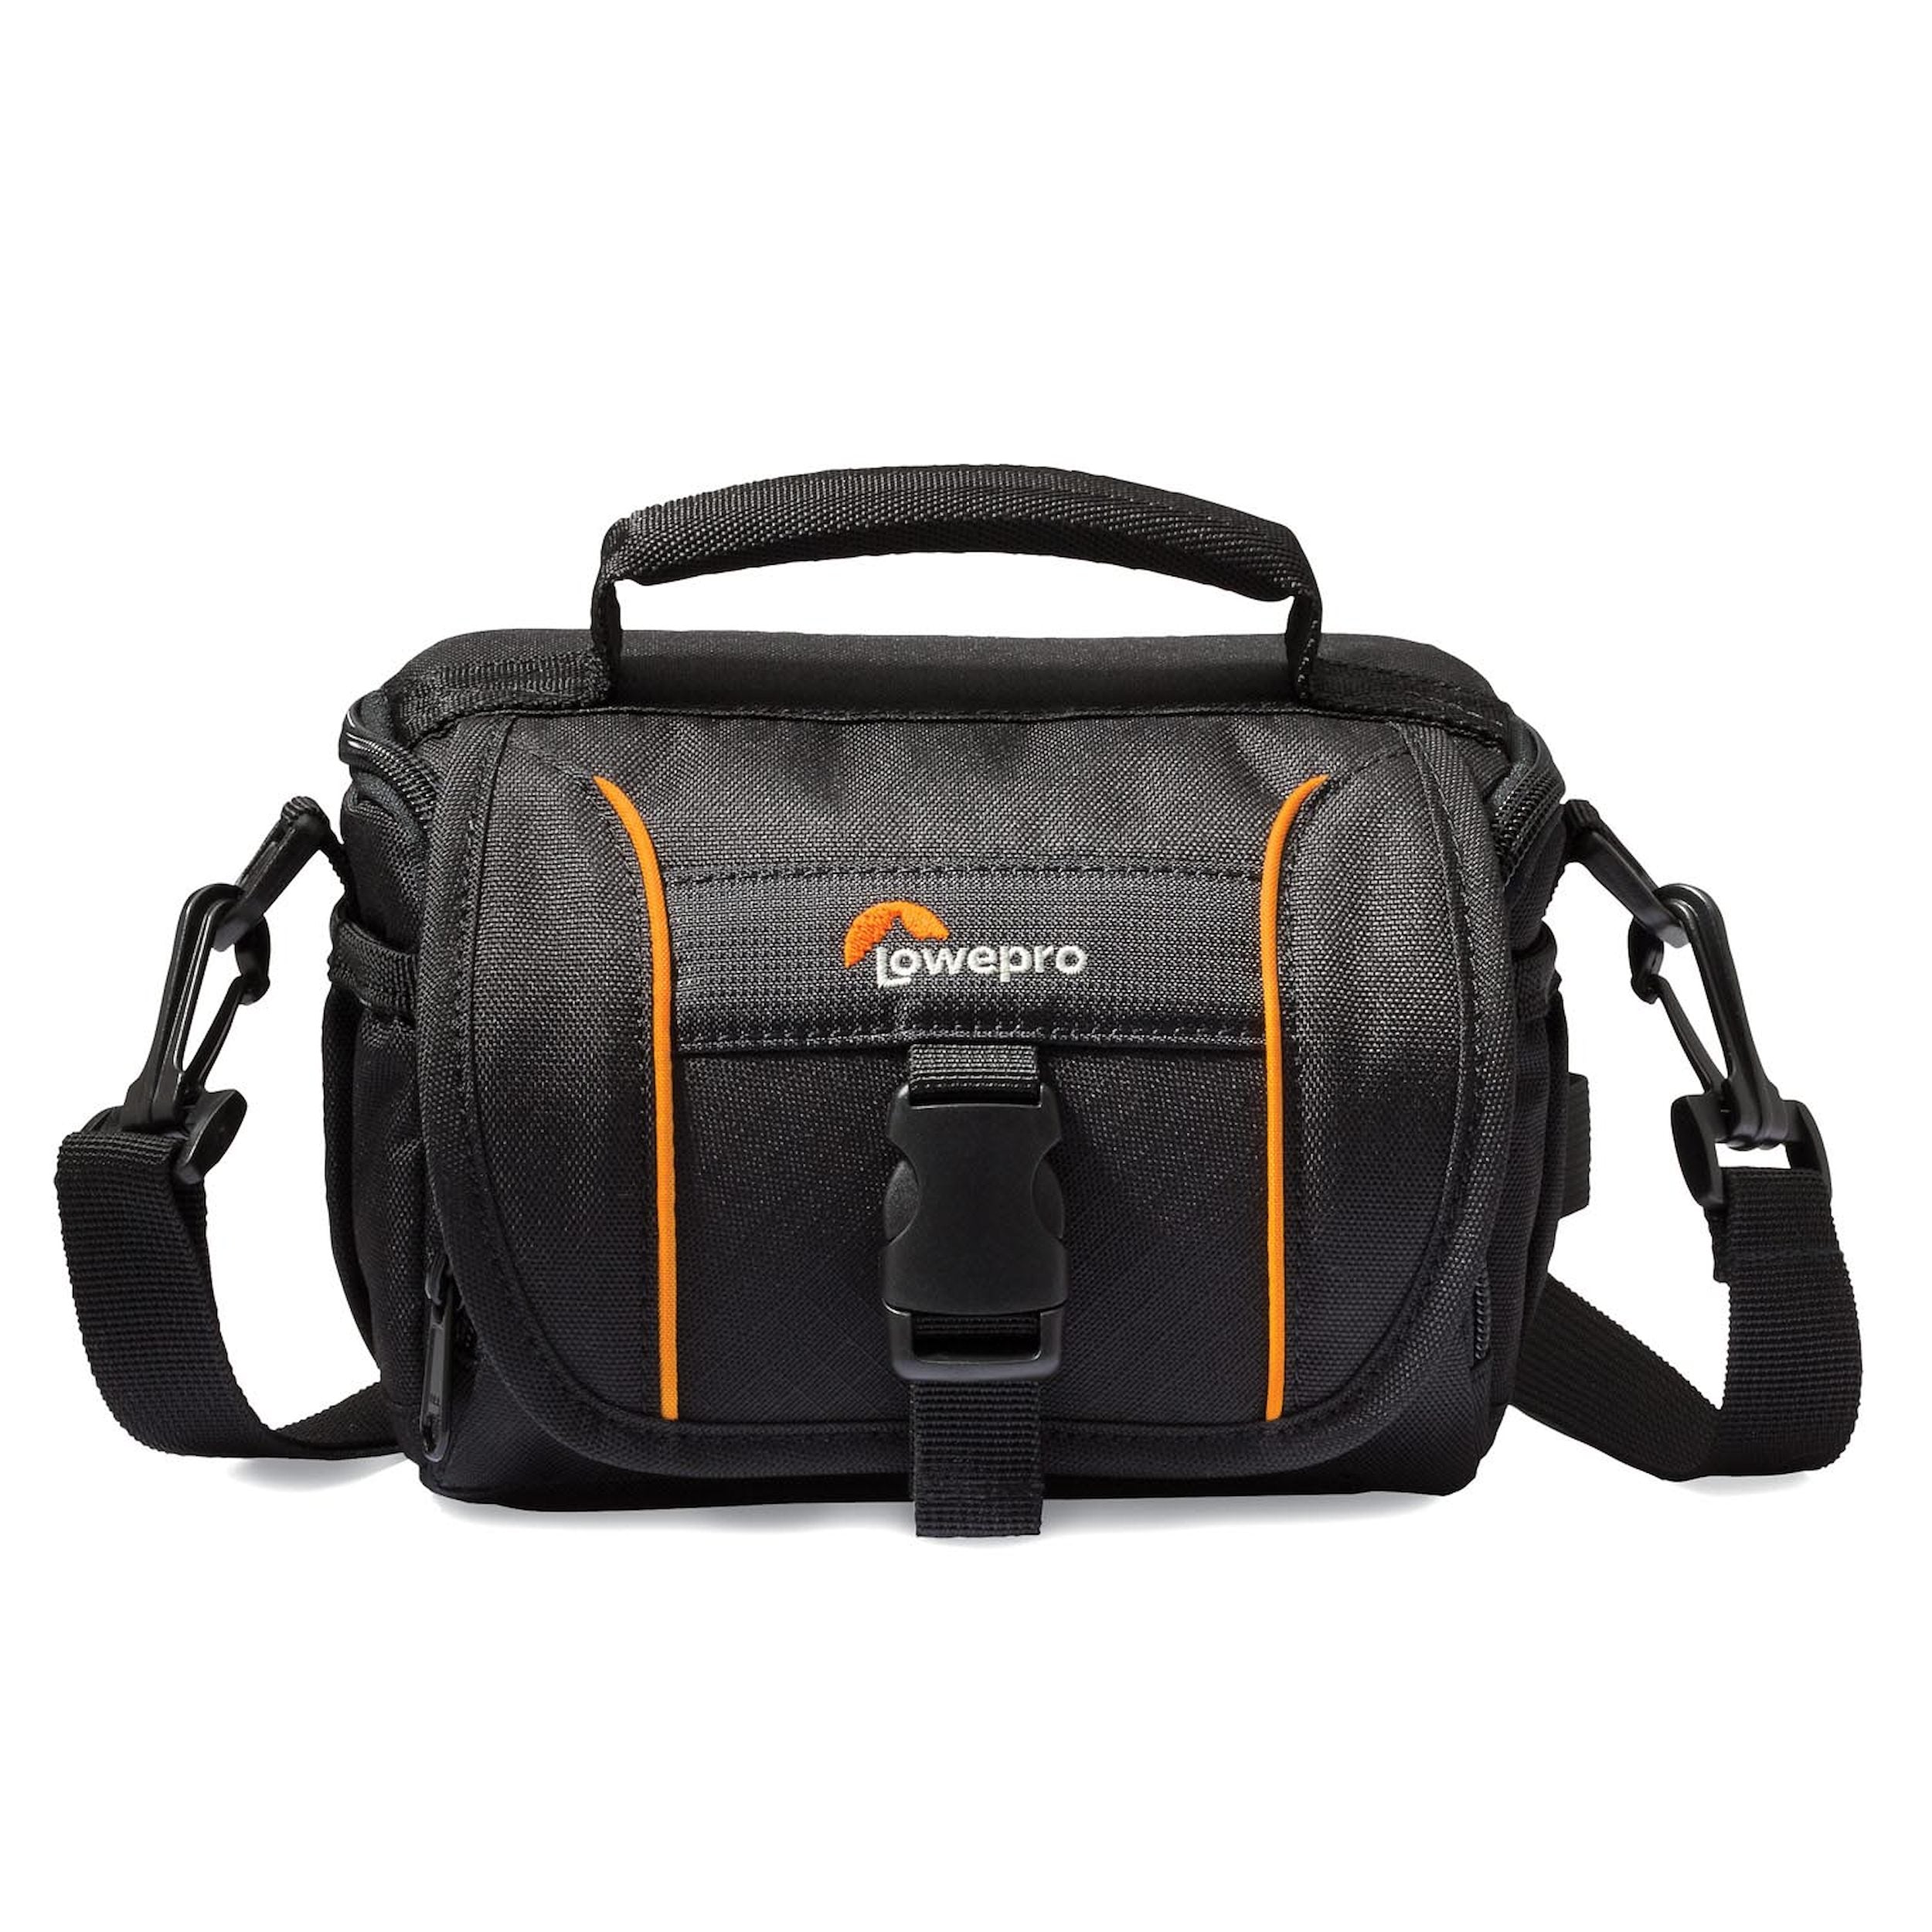 Lowepro Camera Bag Adventura SH 110 II (Black)